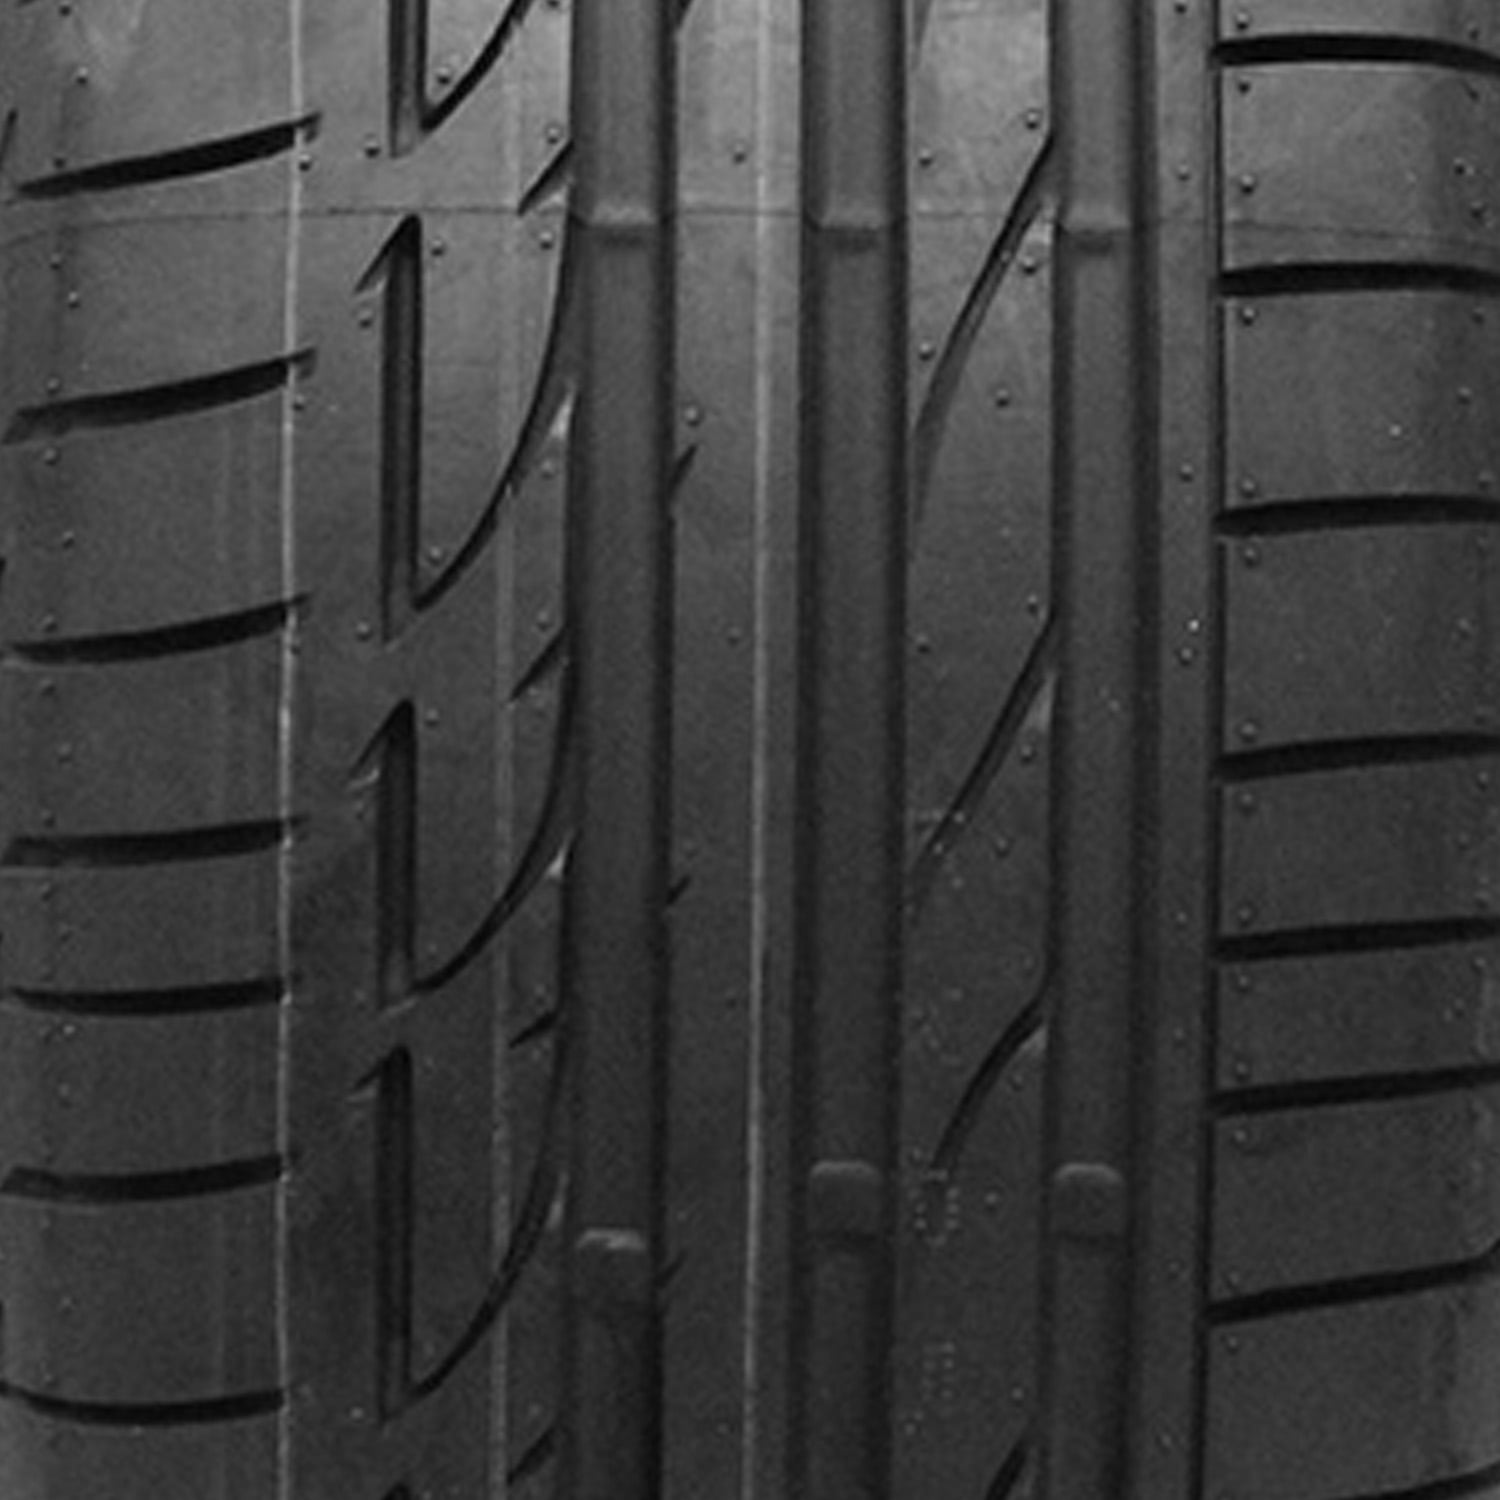 Bridgestone Potenza S001 RFT Summer 245/40R20 99Y XL Passenger Tire